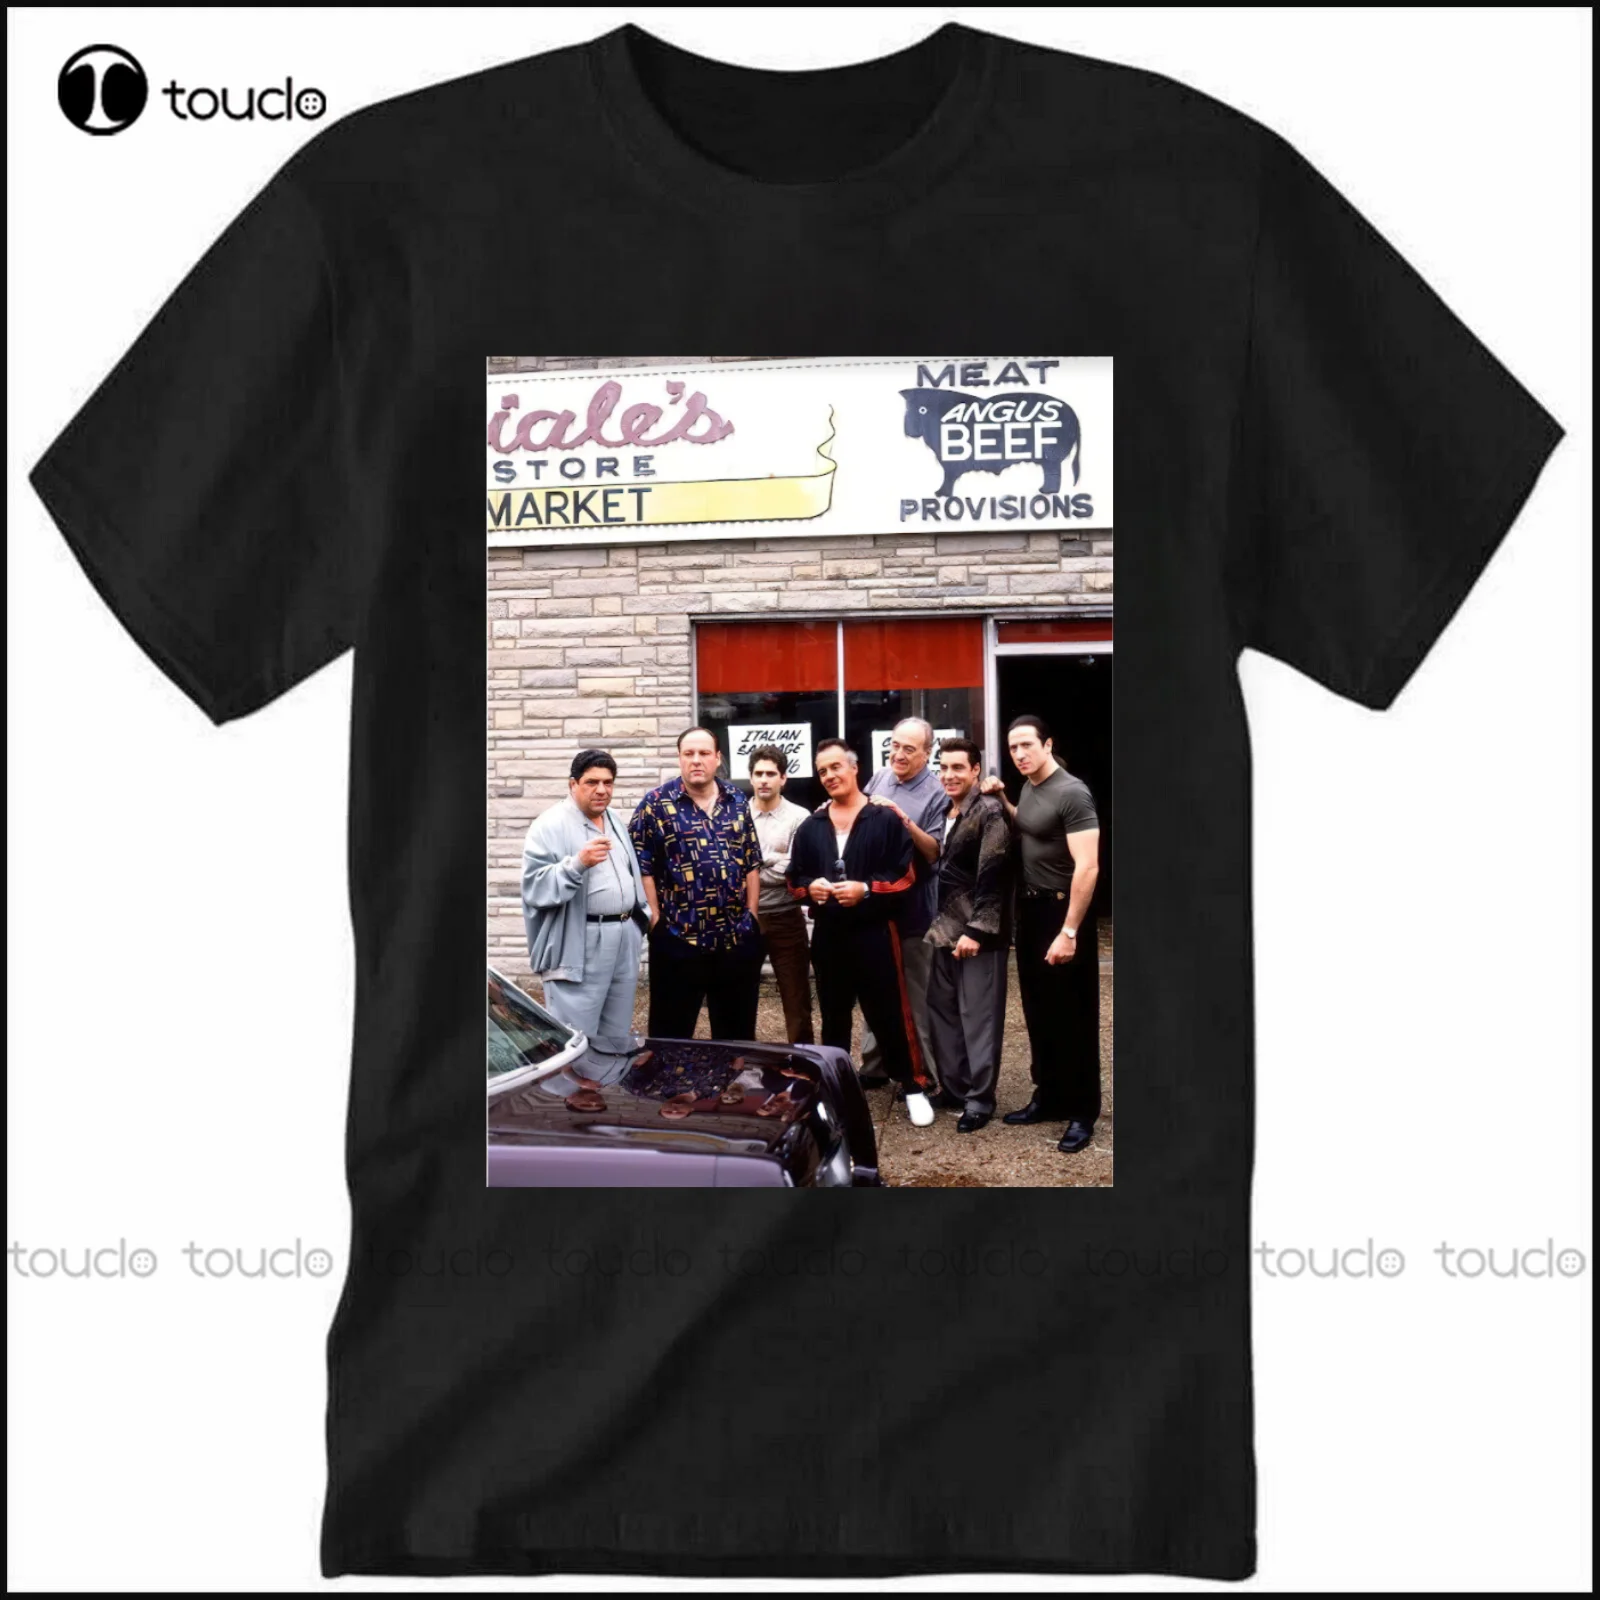 New The Sopranos Mafia New York Classic T-Shirt Unisex Short Sleeve Men'S Tee S-5Xl Comfort Colors Tshirt